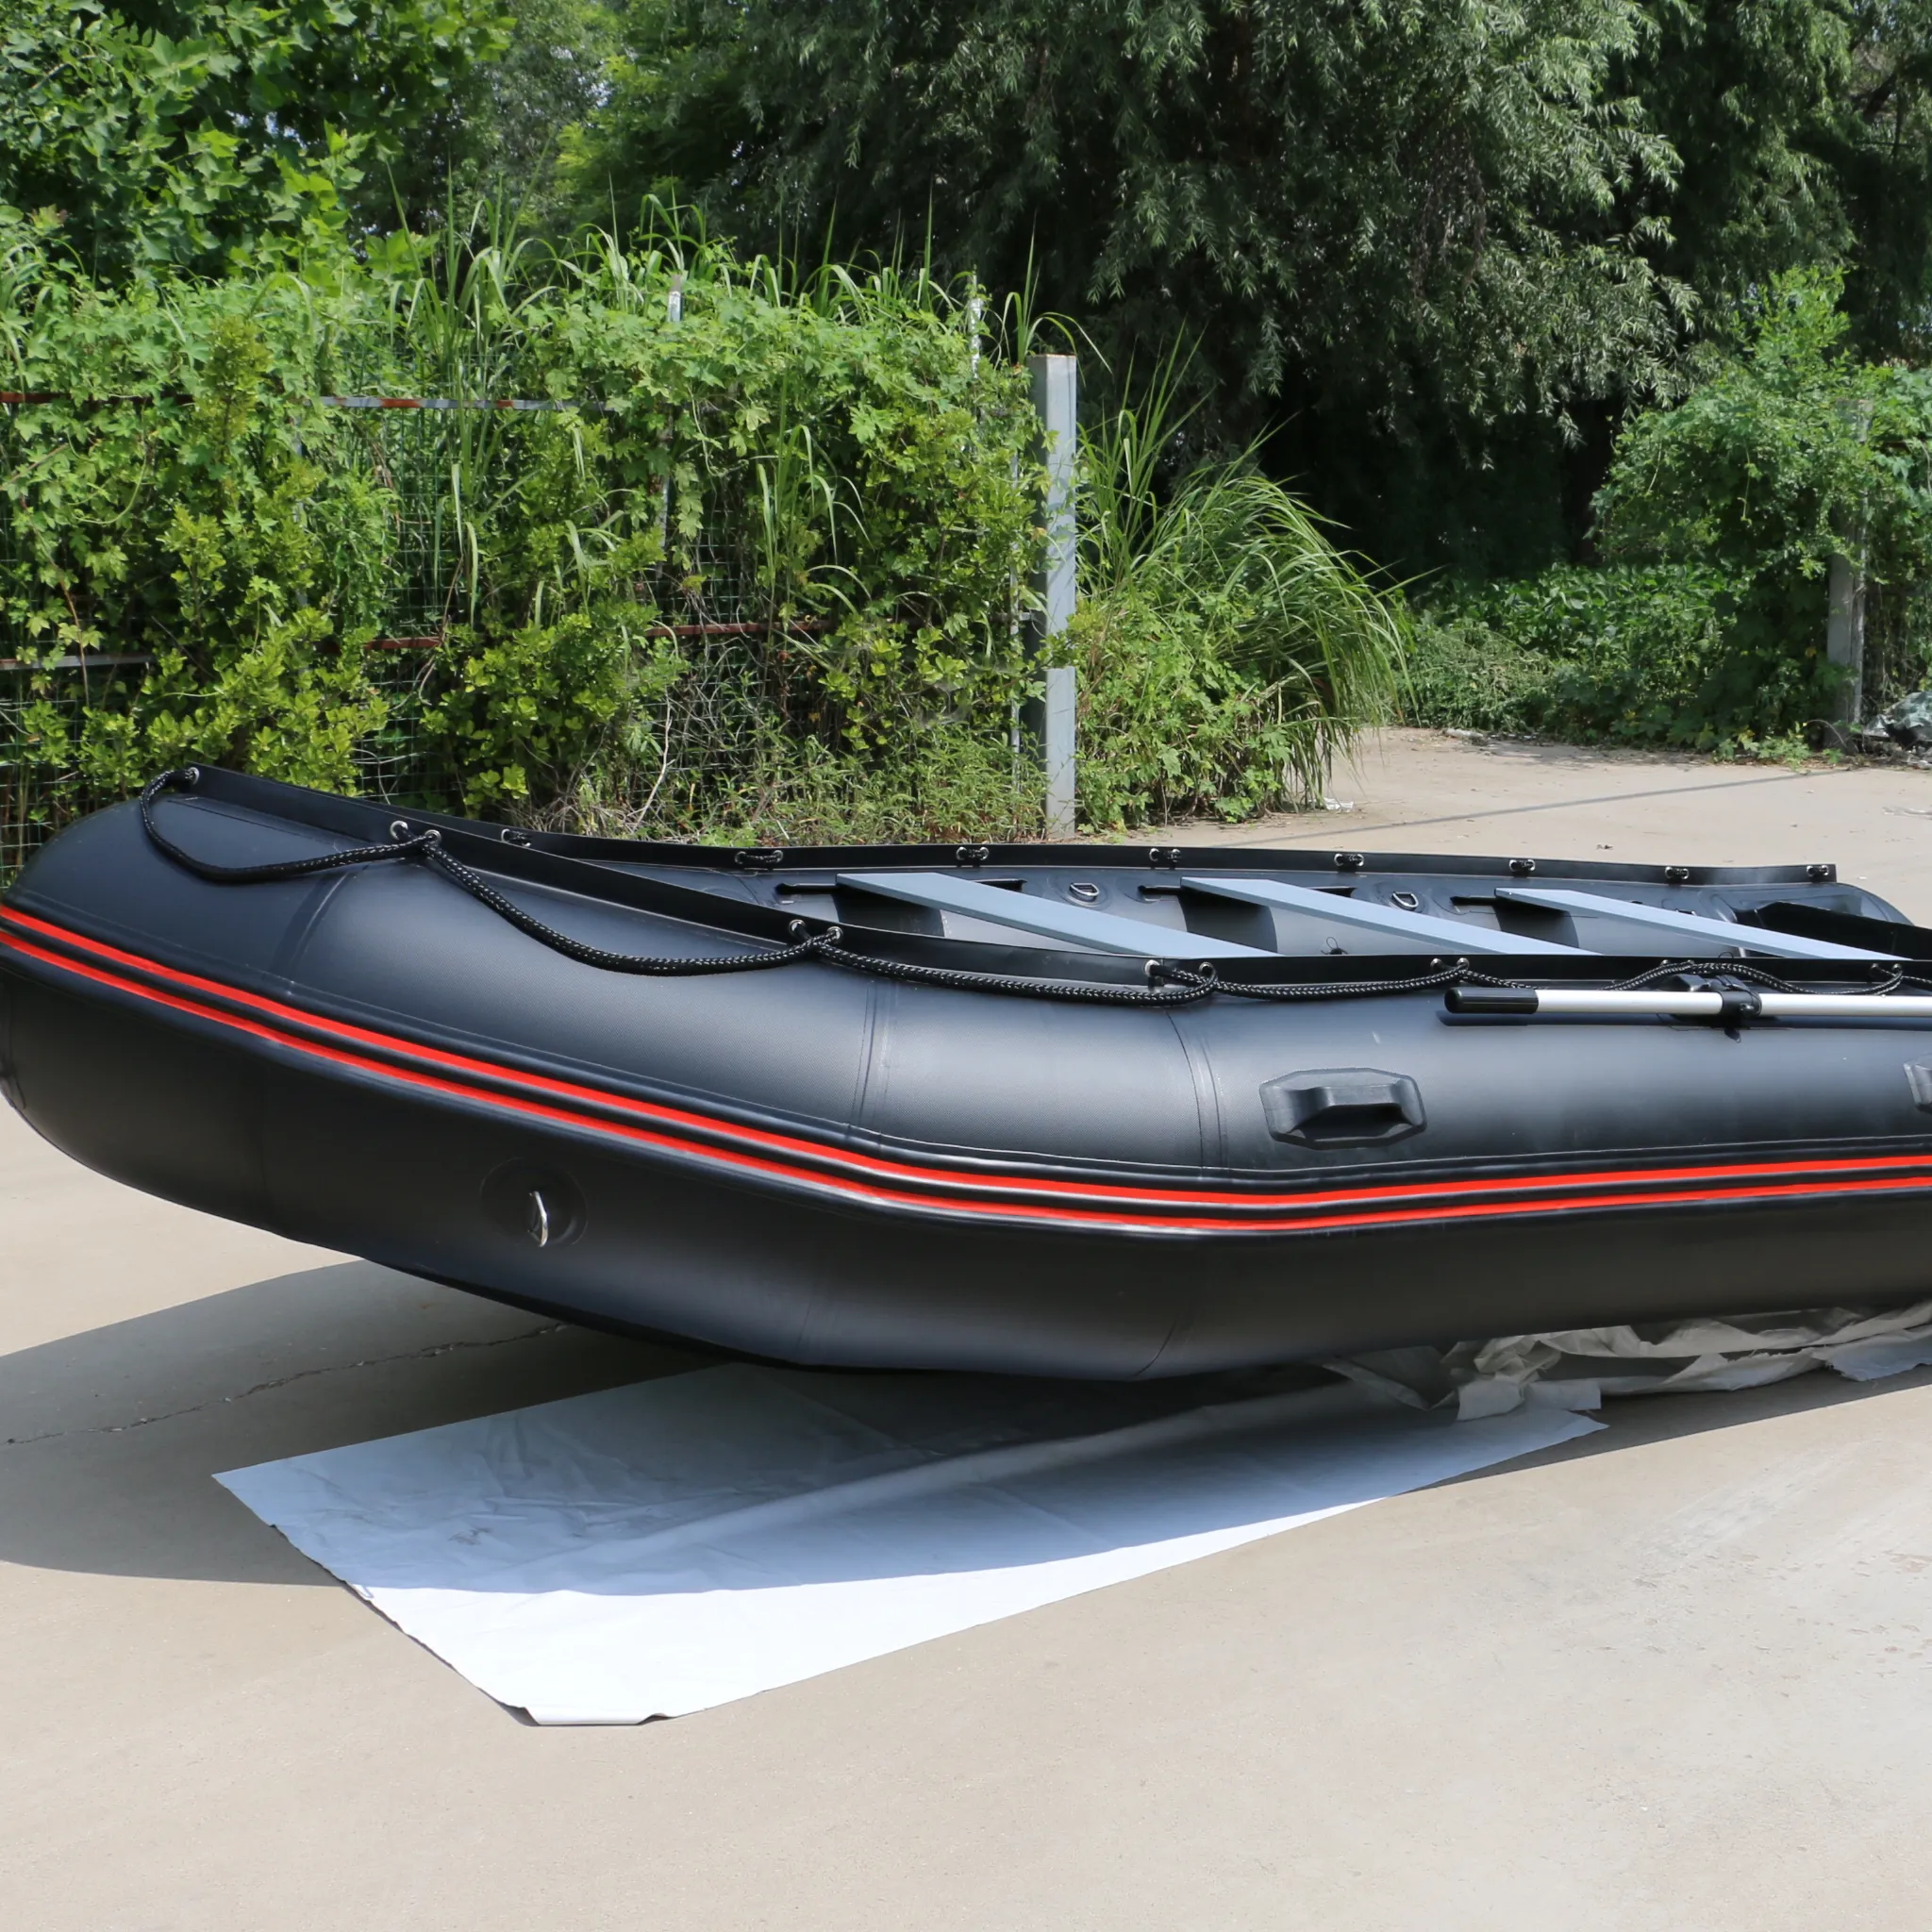 10 ft Inflatable Boat Inflatable Pontoon Dinghy Raft Tender Boat